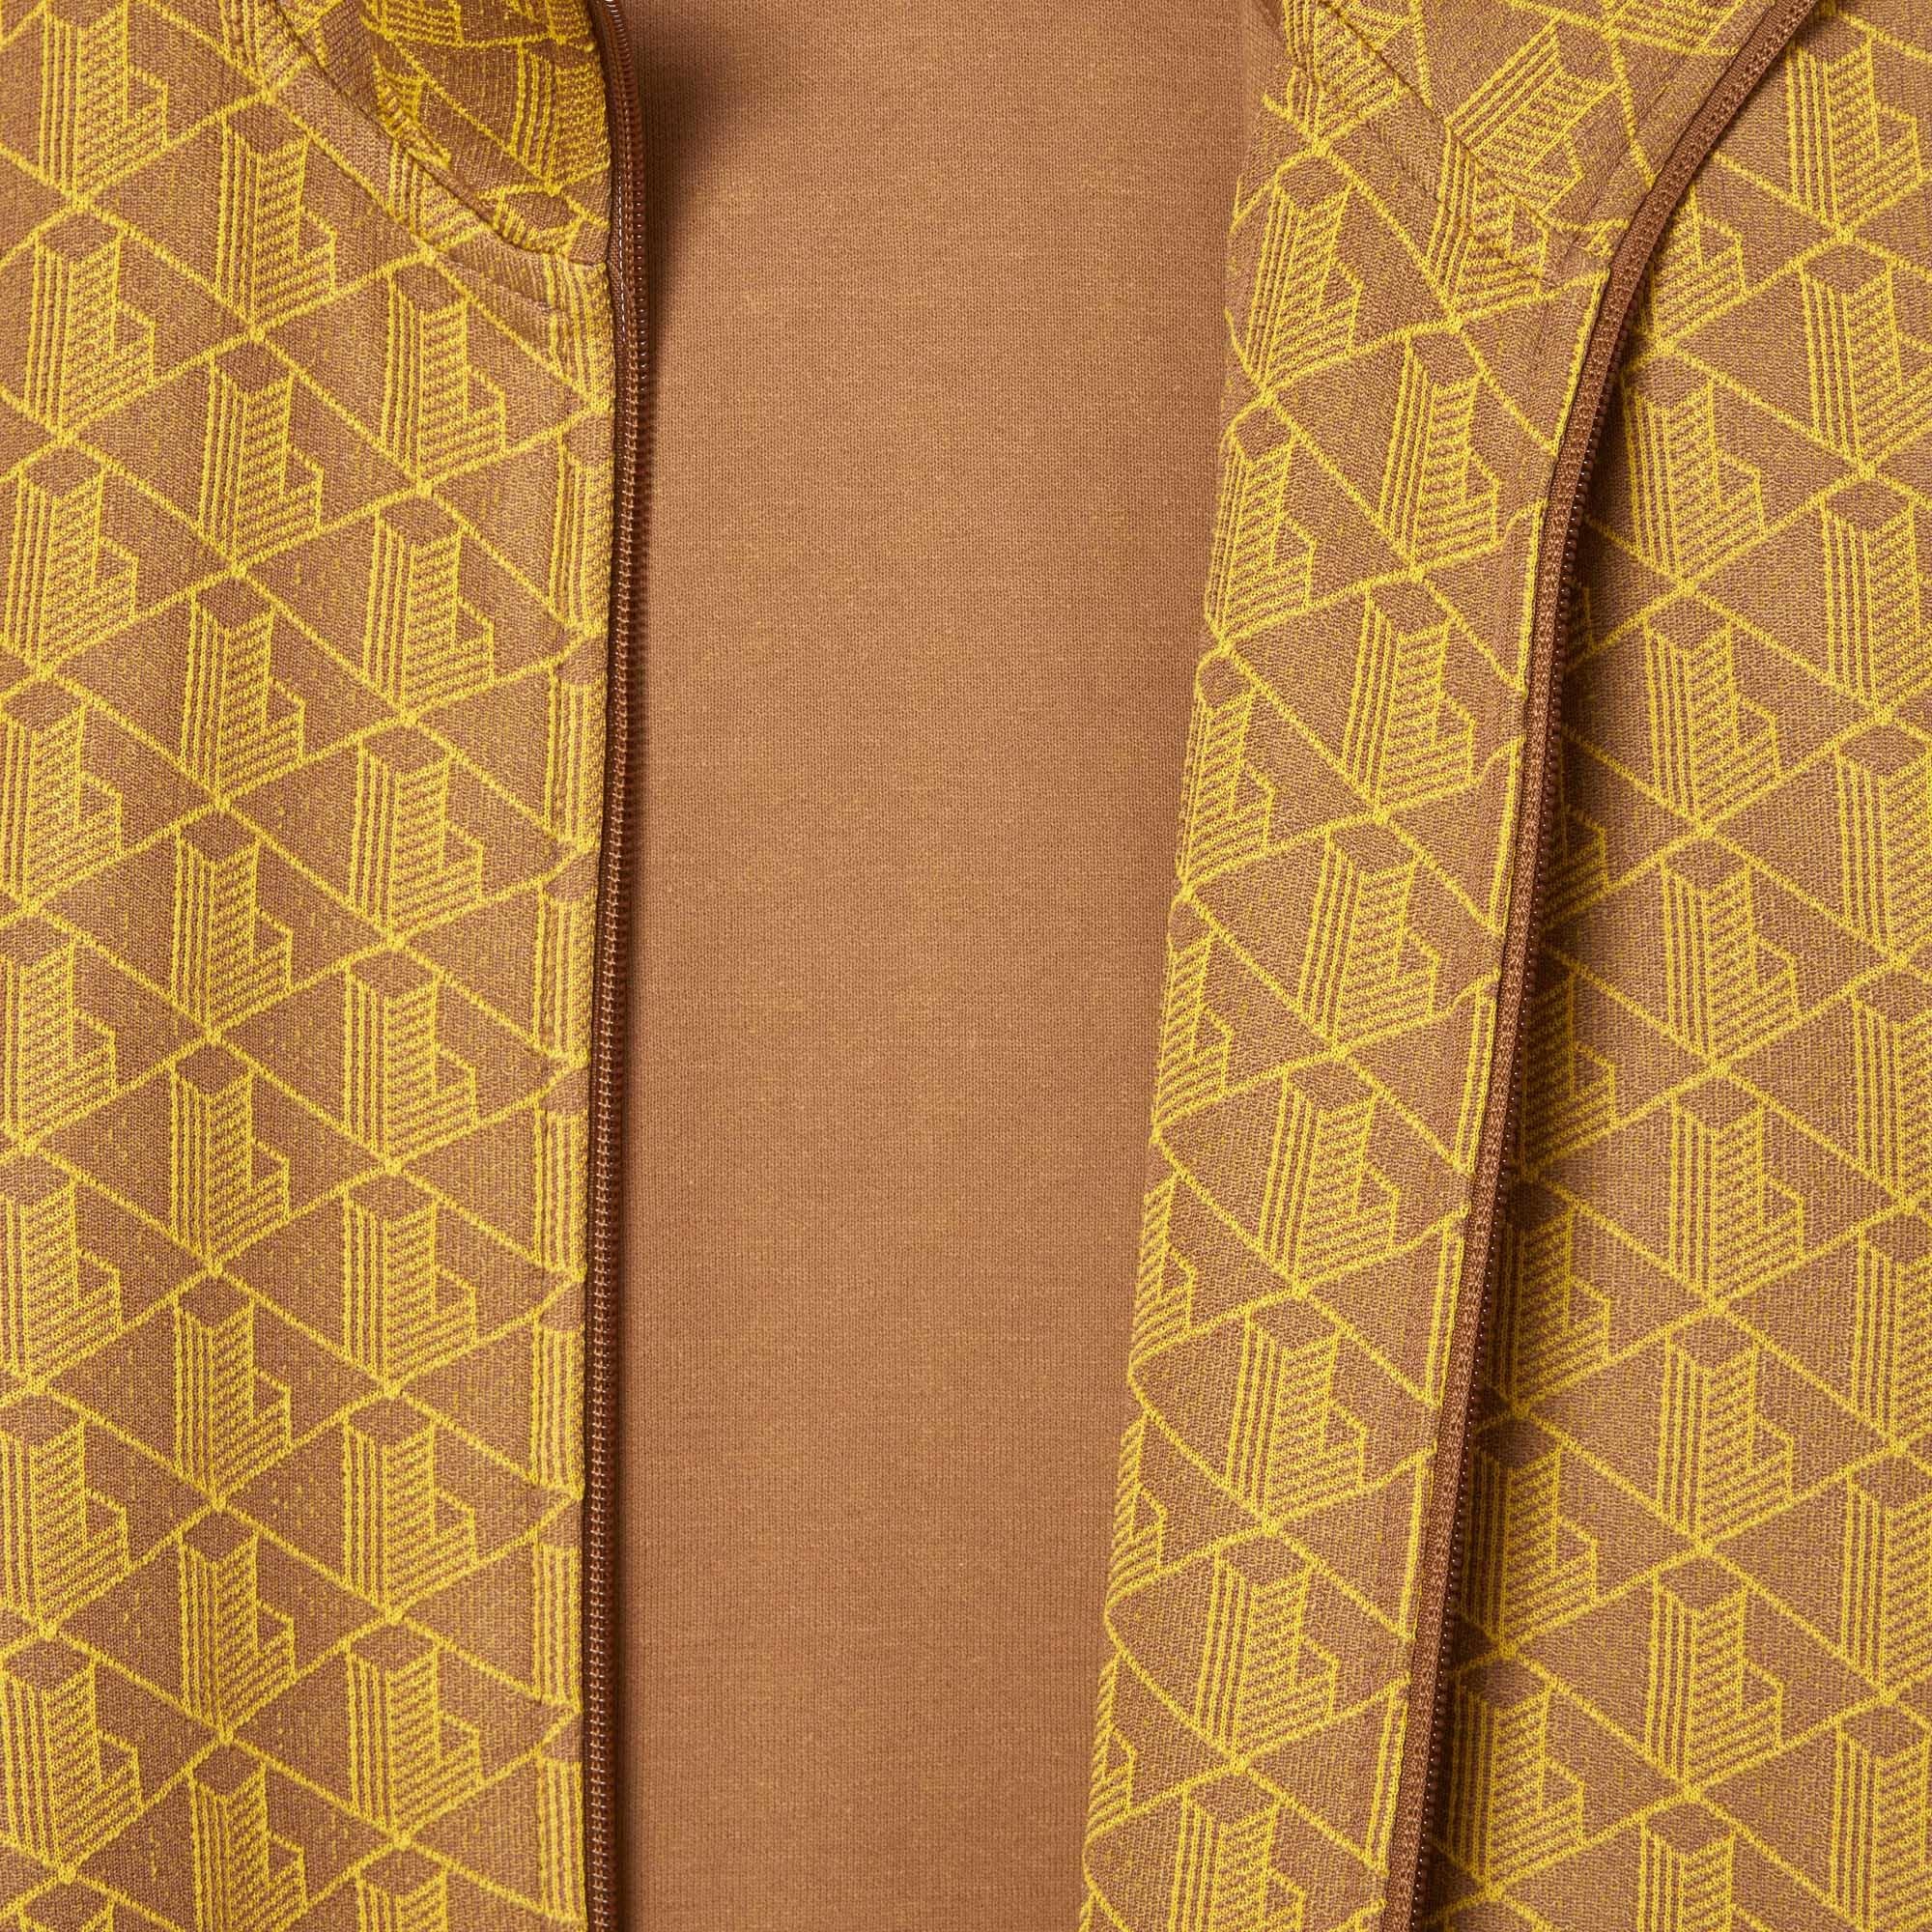 Lacoste Paris bluza z monogramem zapinana na suwak